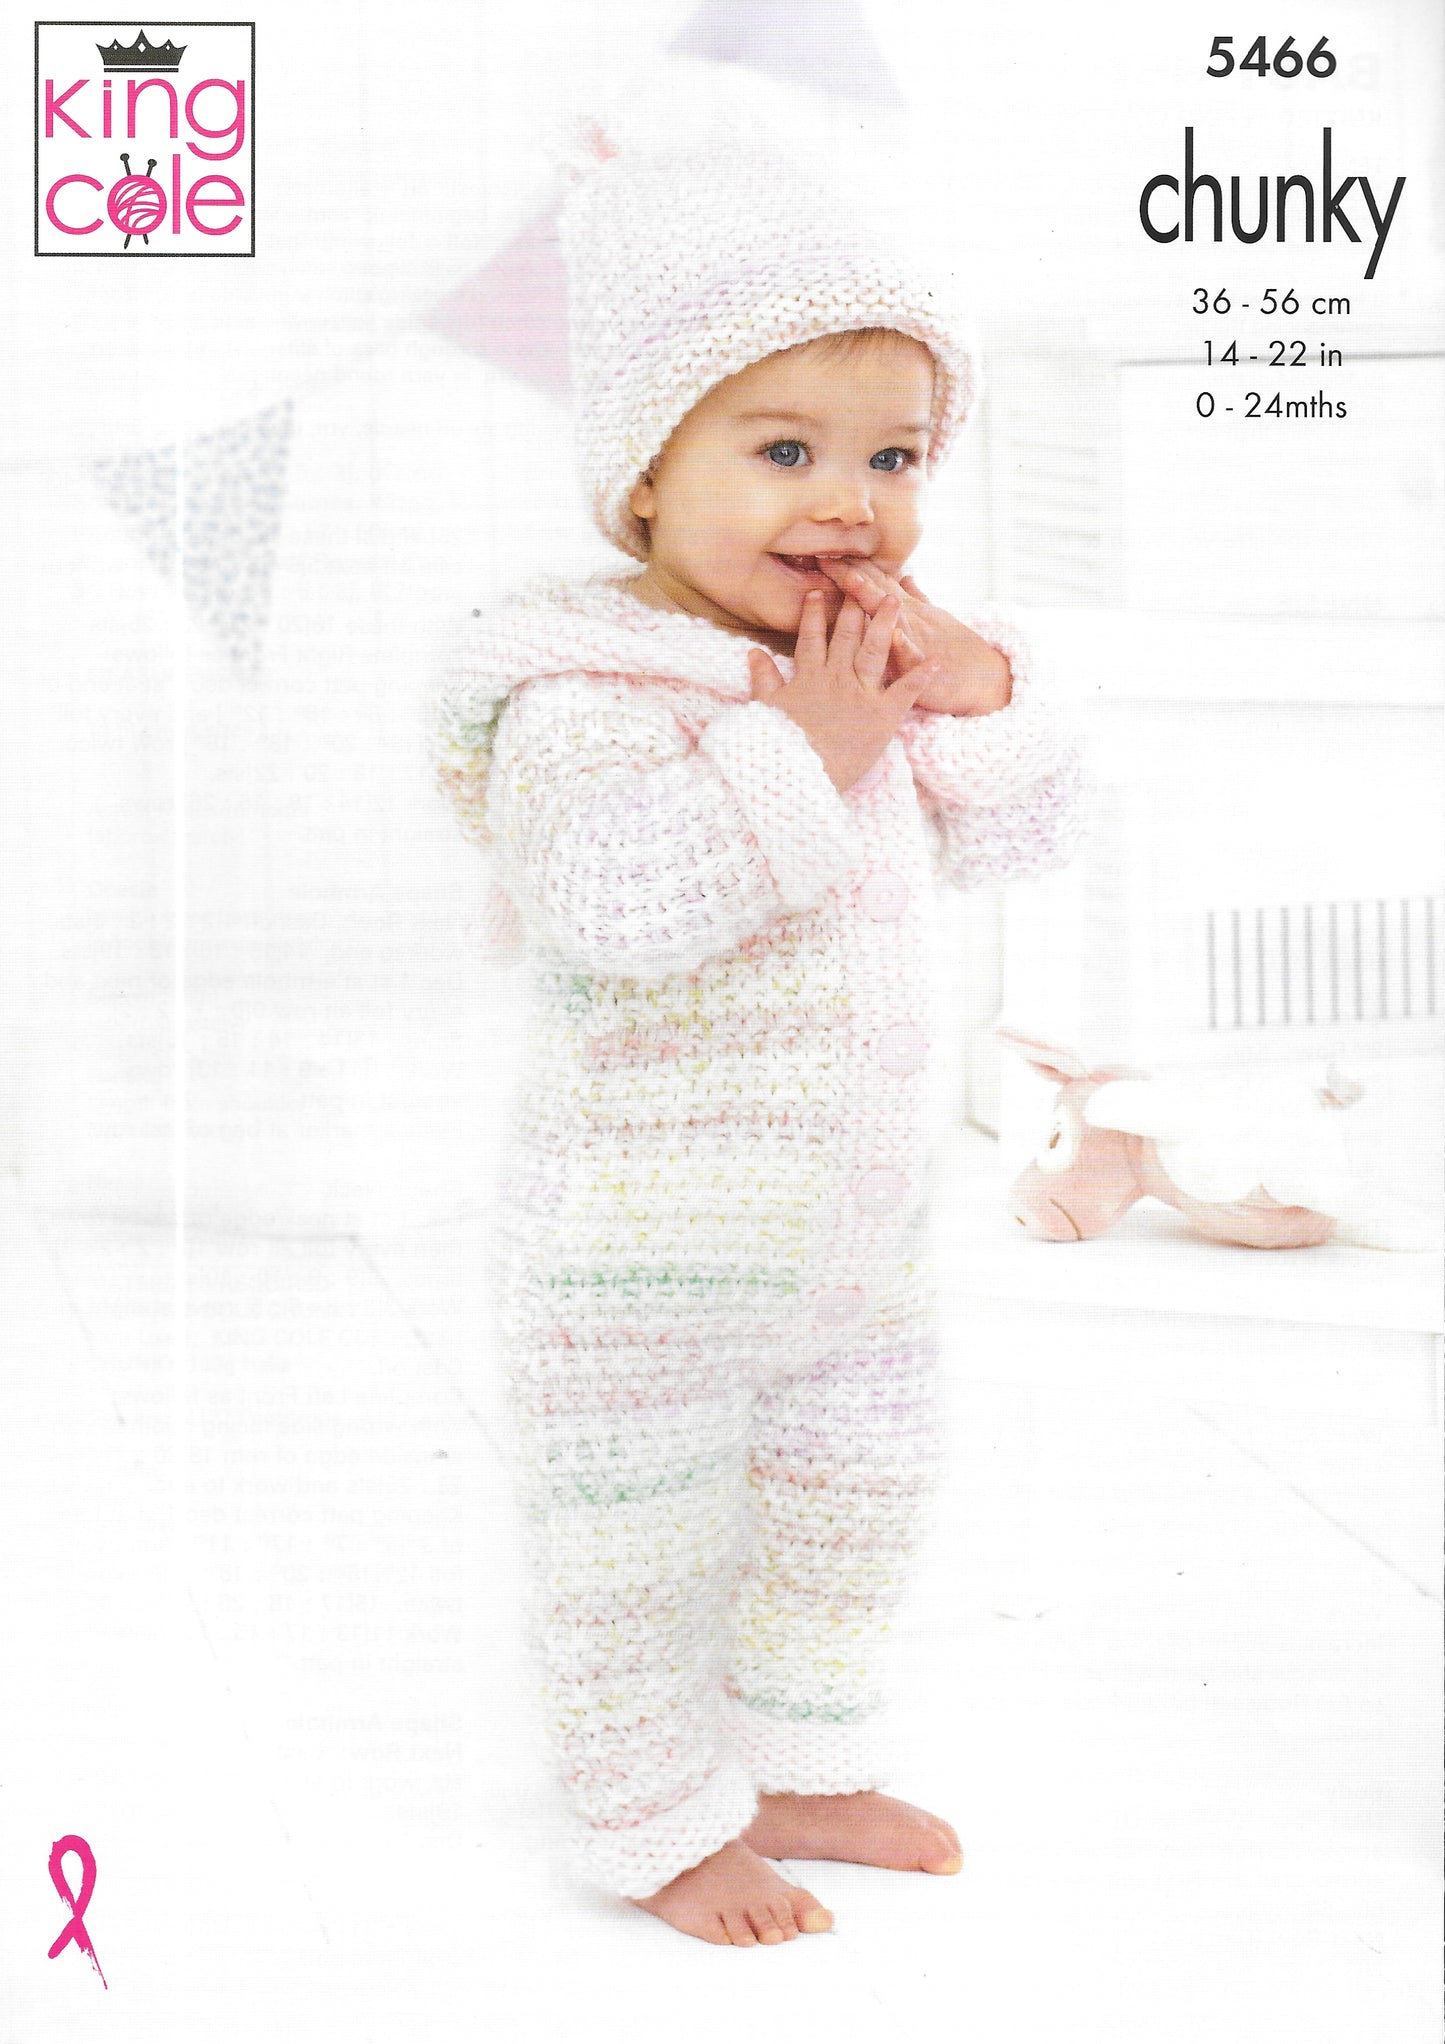 5466 King Cole chunky knit Baby Set knitting pattern